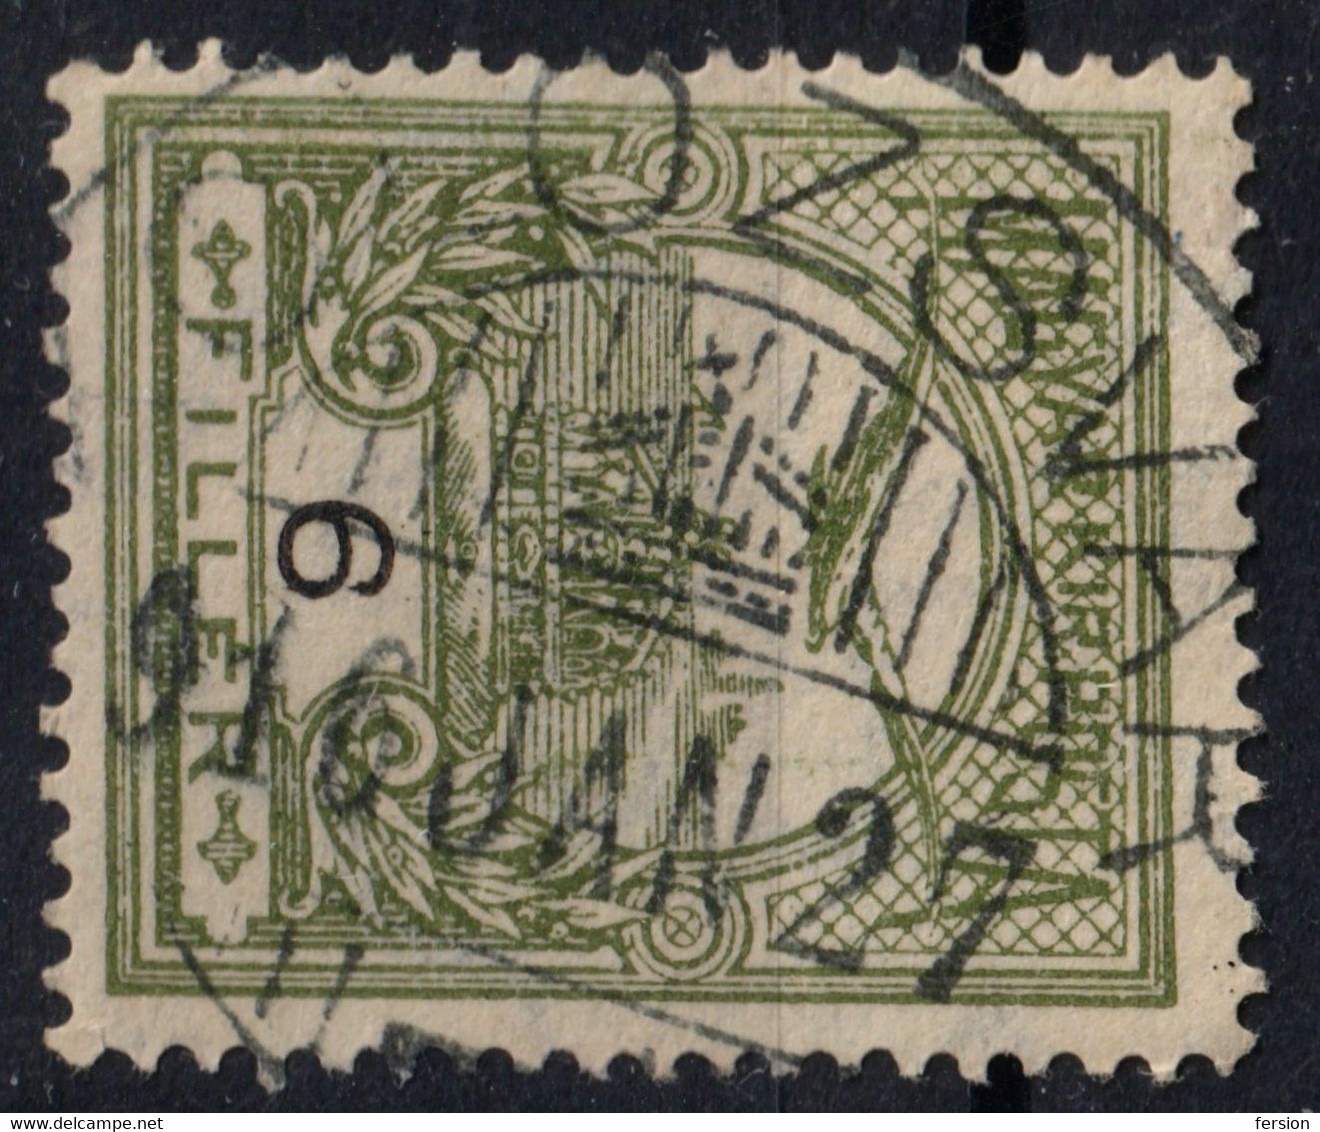 KOLOZSVÁR CLUJ-NAPOCA Postmark / TURUL Crown 1916 Hungary Romania Banat Transylvania KOLOZS County KuK K.u.K - 6 Fill - Transilvania